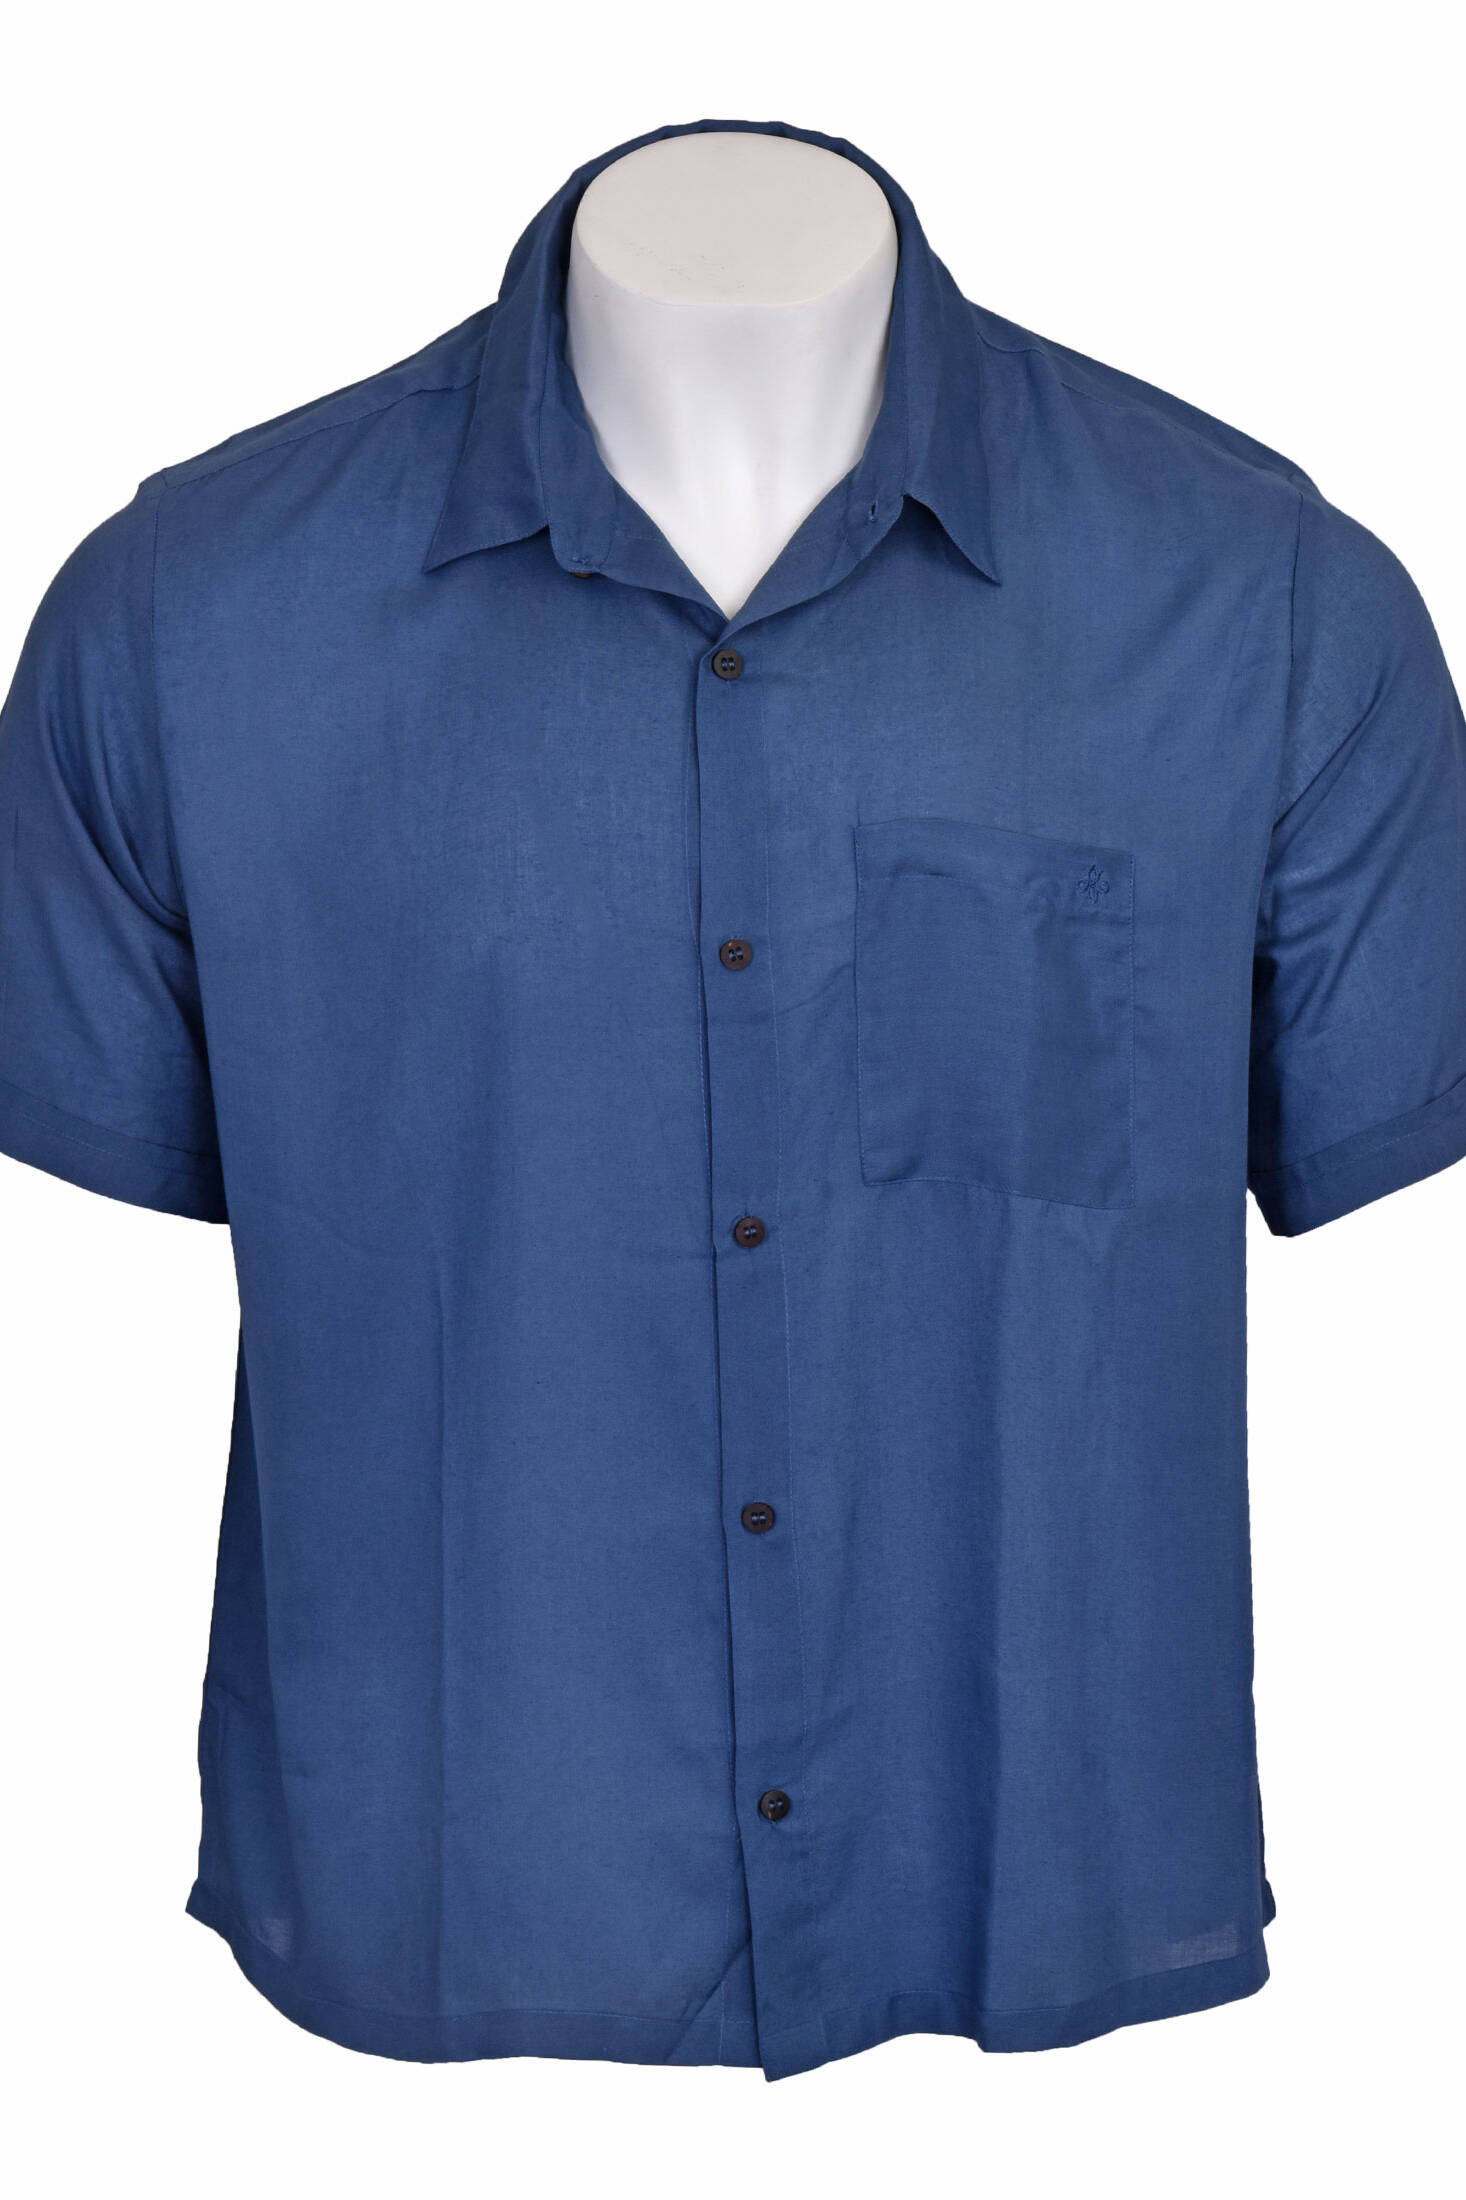 Tacana Rayon Shirt Short Sleeve Print 2 Front View